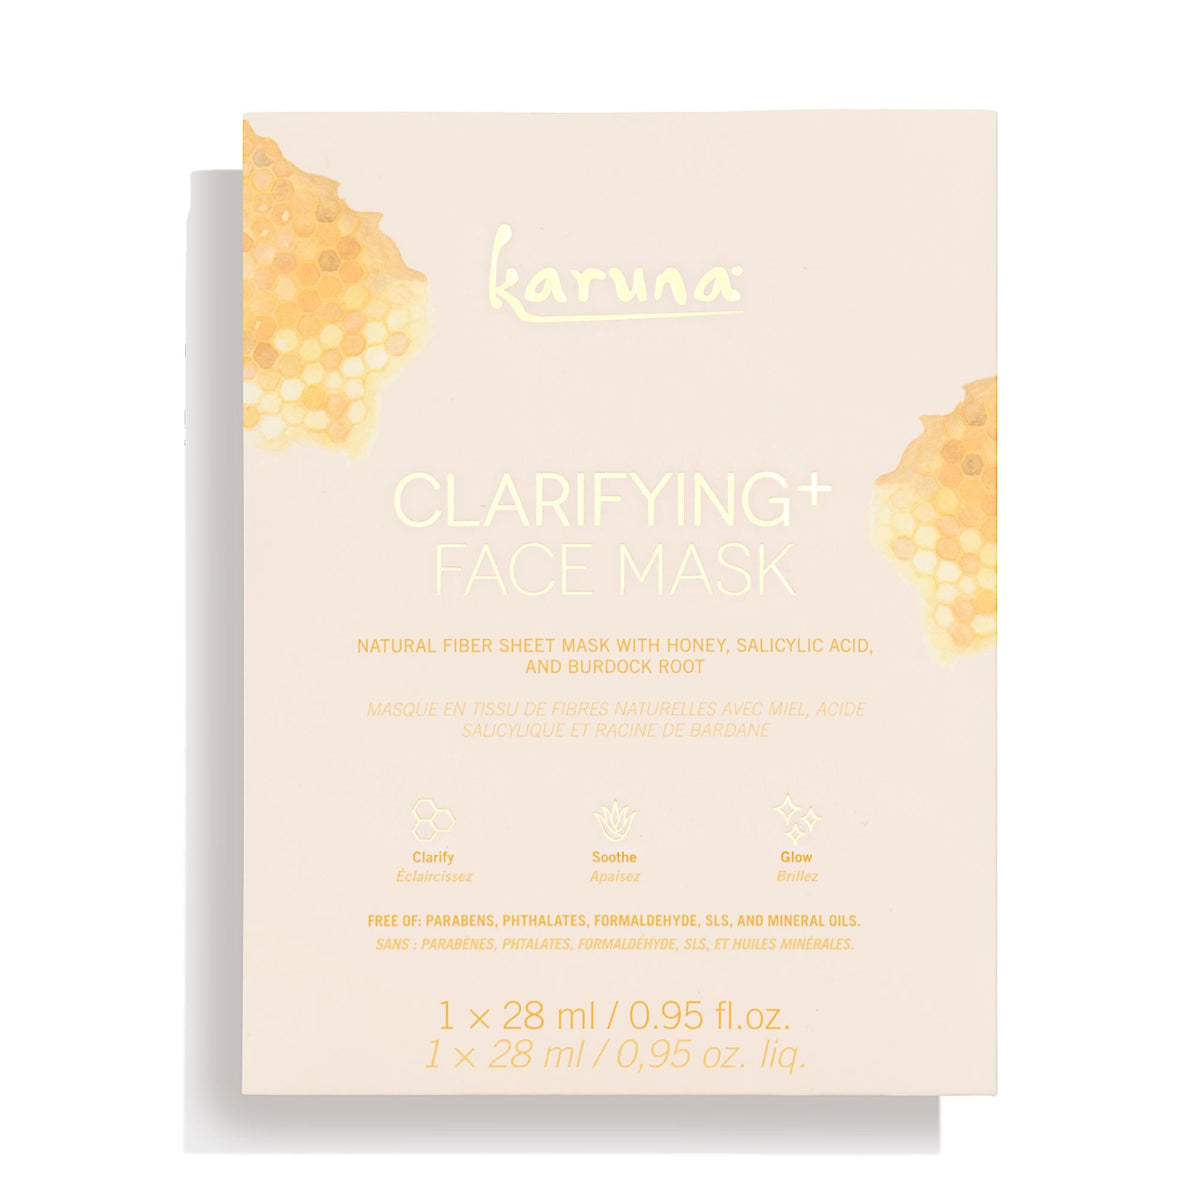 Karuna Clarifying+ Face Mask, 1 ct